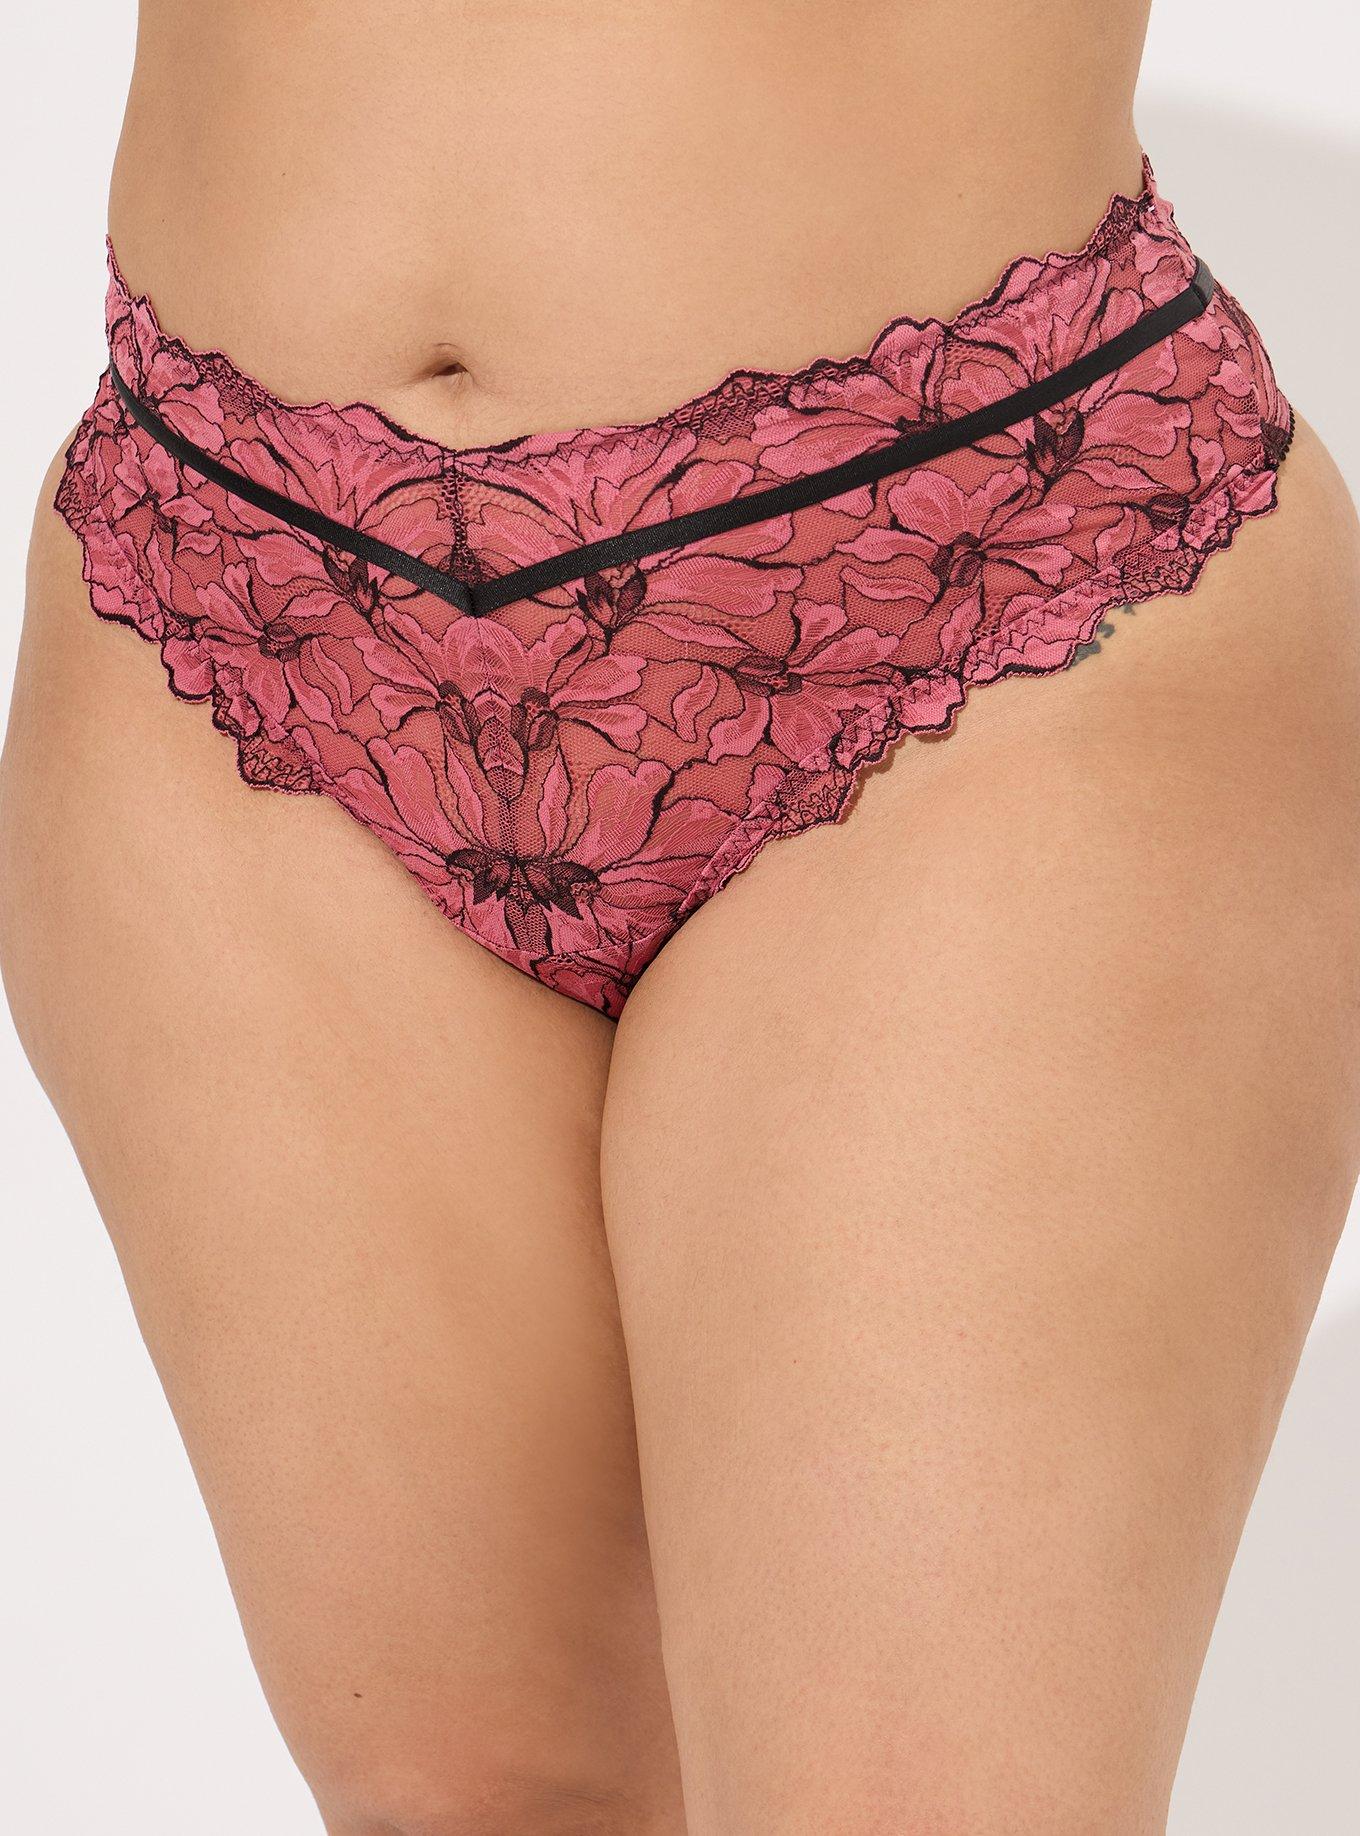 Plus Size - Betsey Johnson Black Bow Lace Thong Panty - Torrid